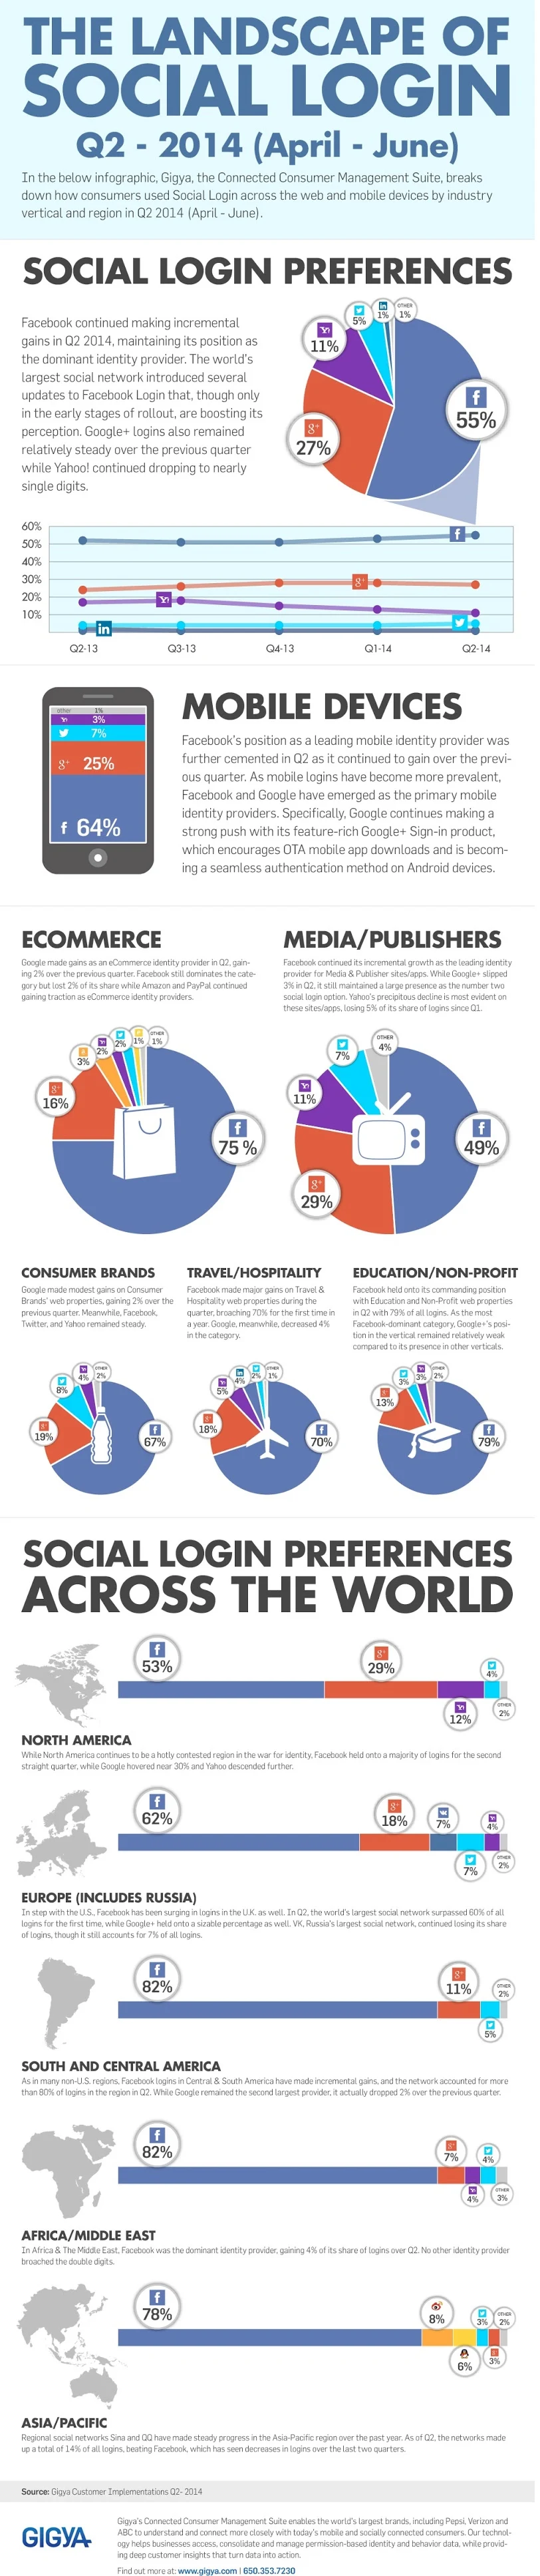 The Landscape of Social Login Q2 2014: #Facebook Widens the Gap - #infographic #socialmedia